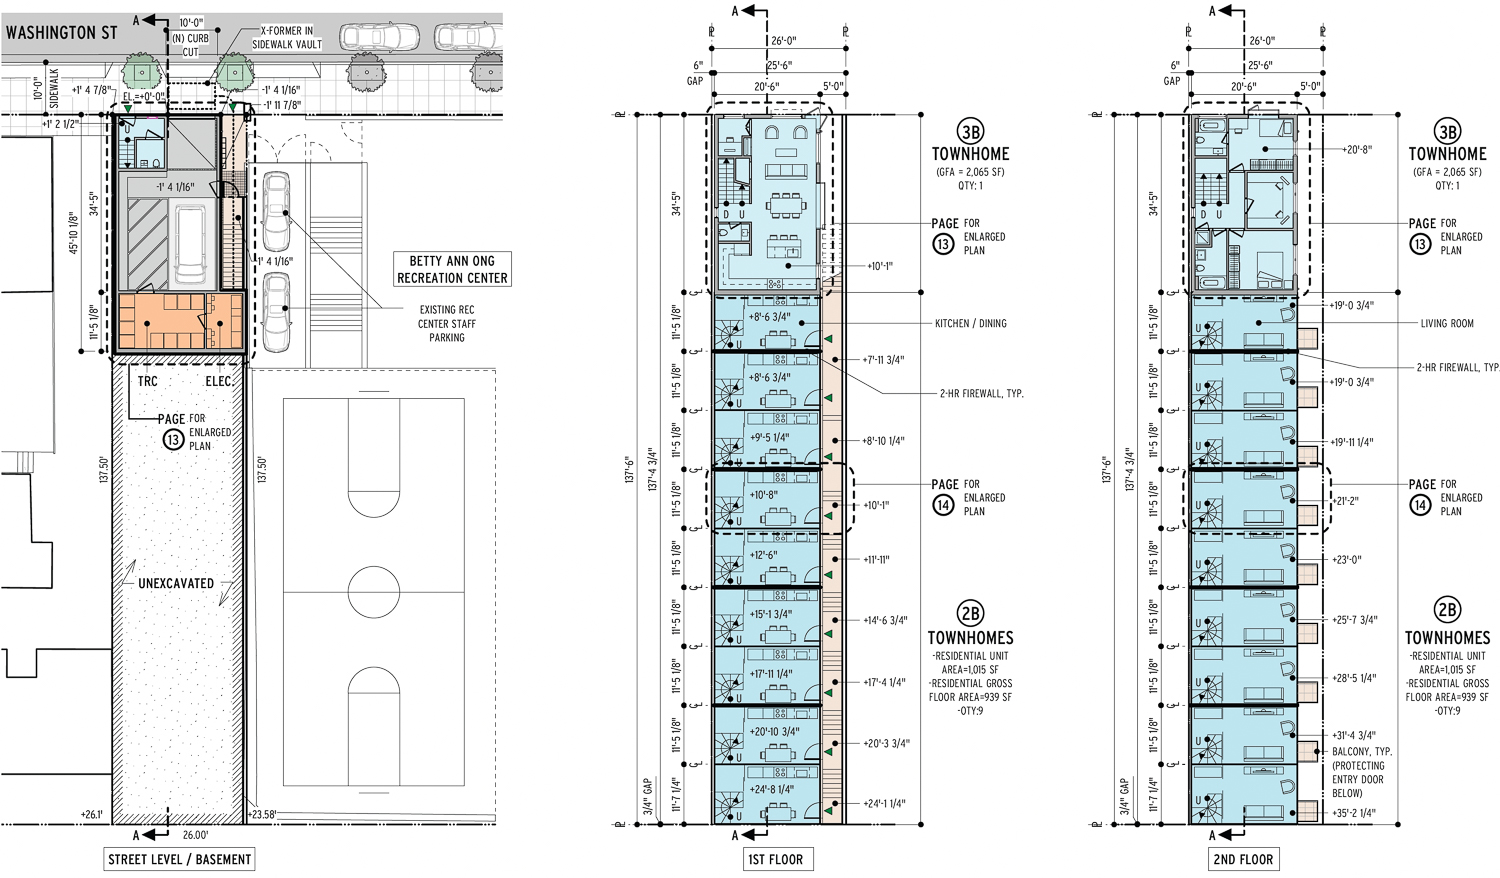 1151 Washington Street floor plans, illustration by Macy Architecture